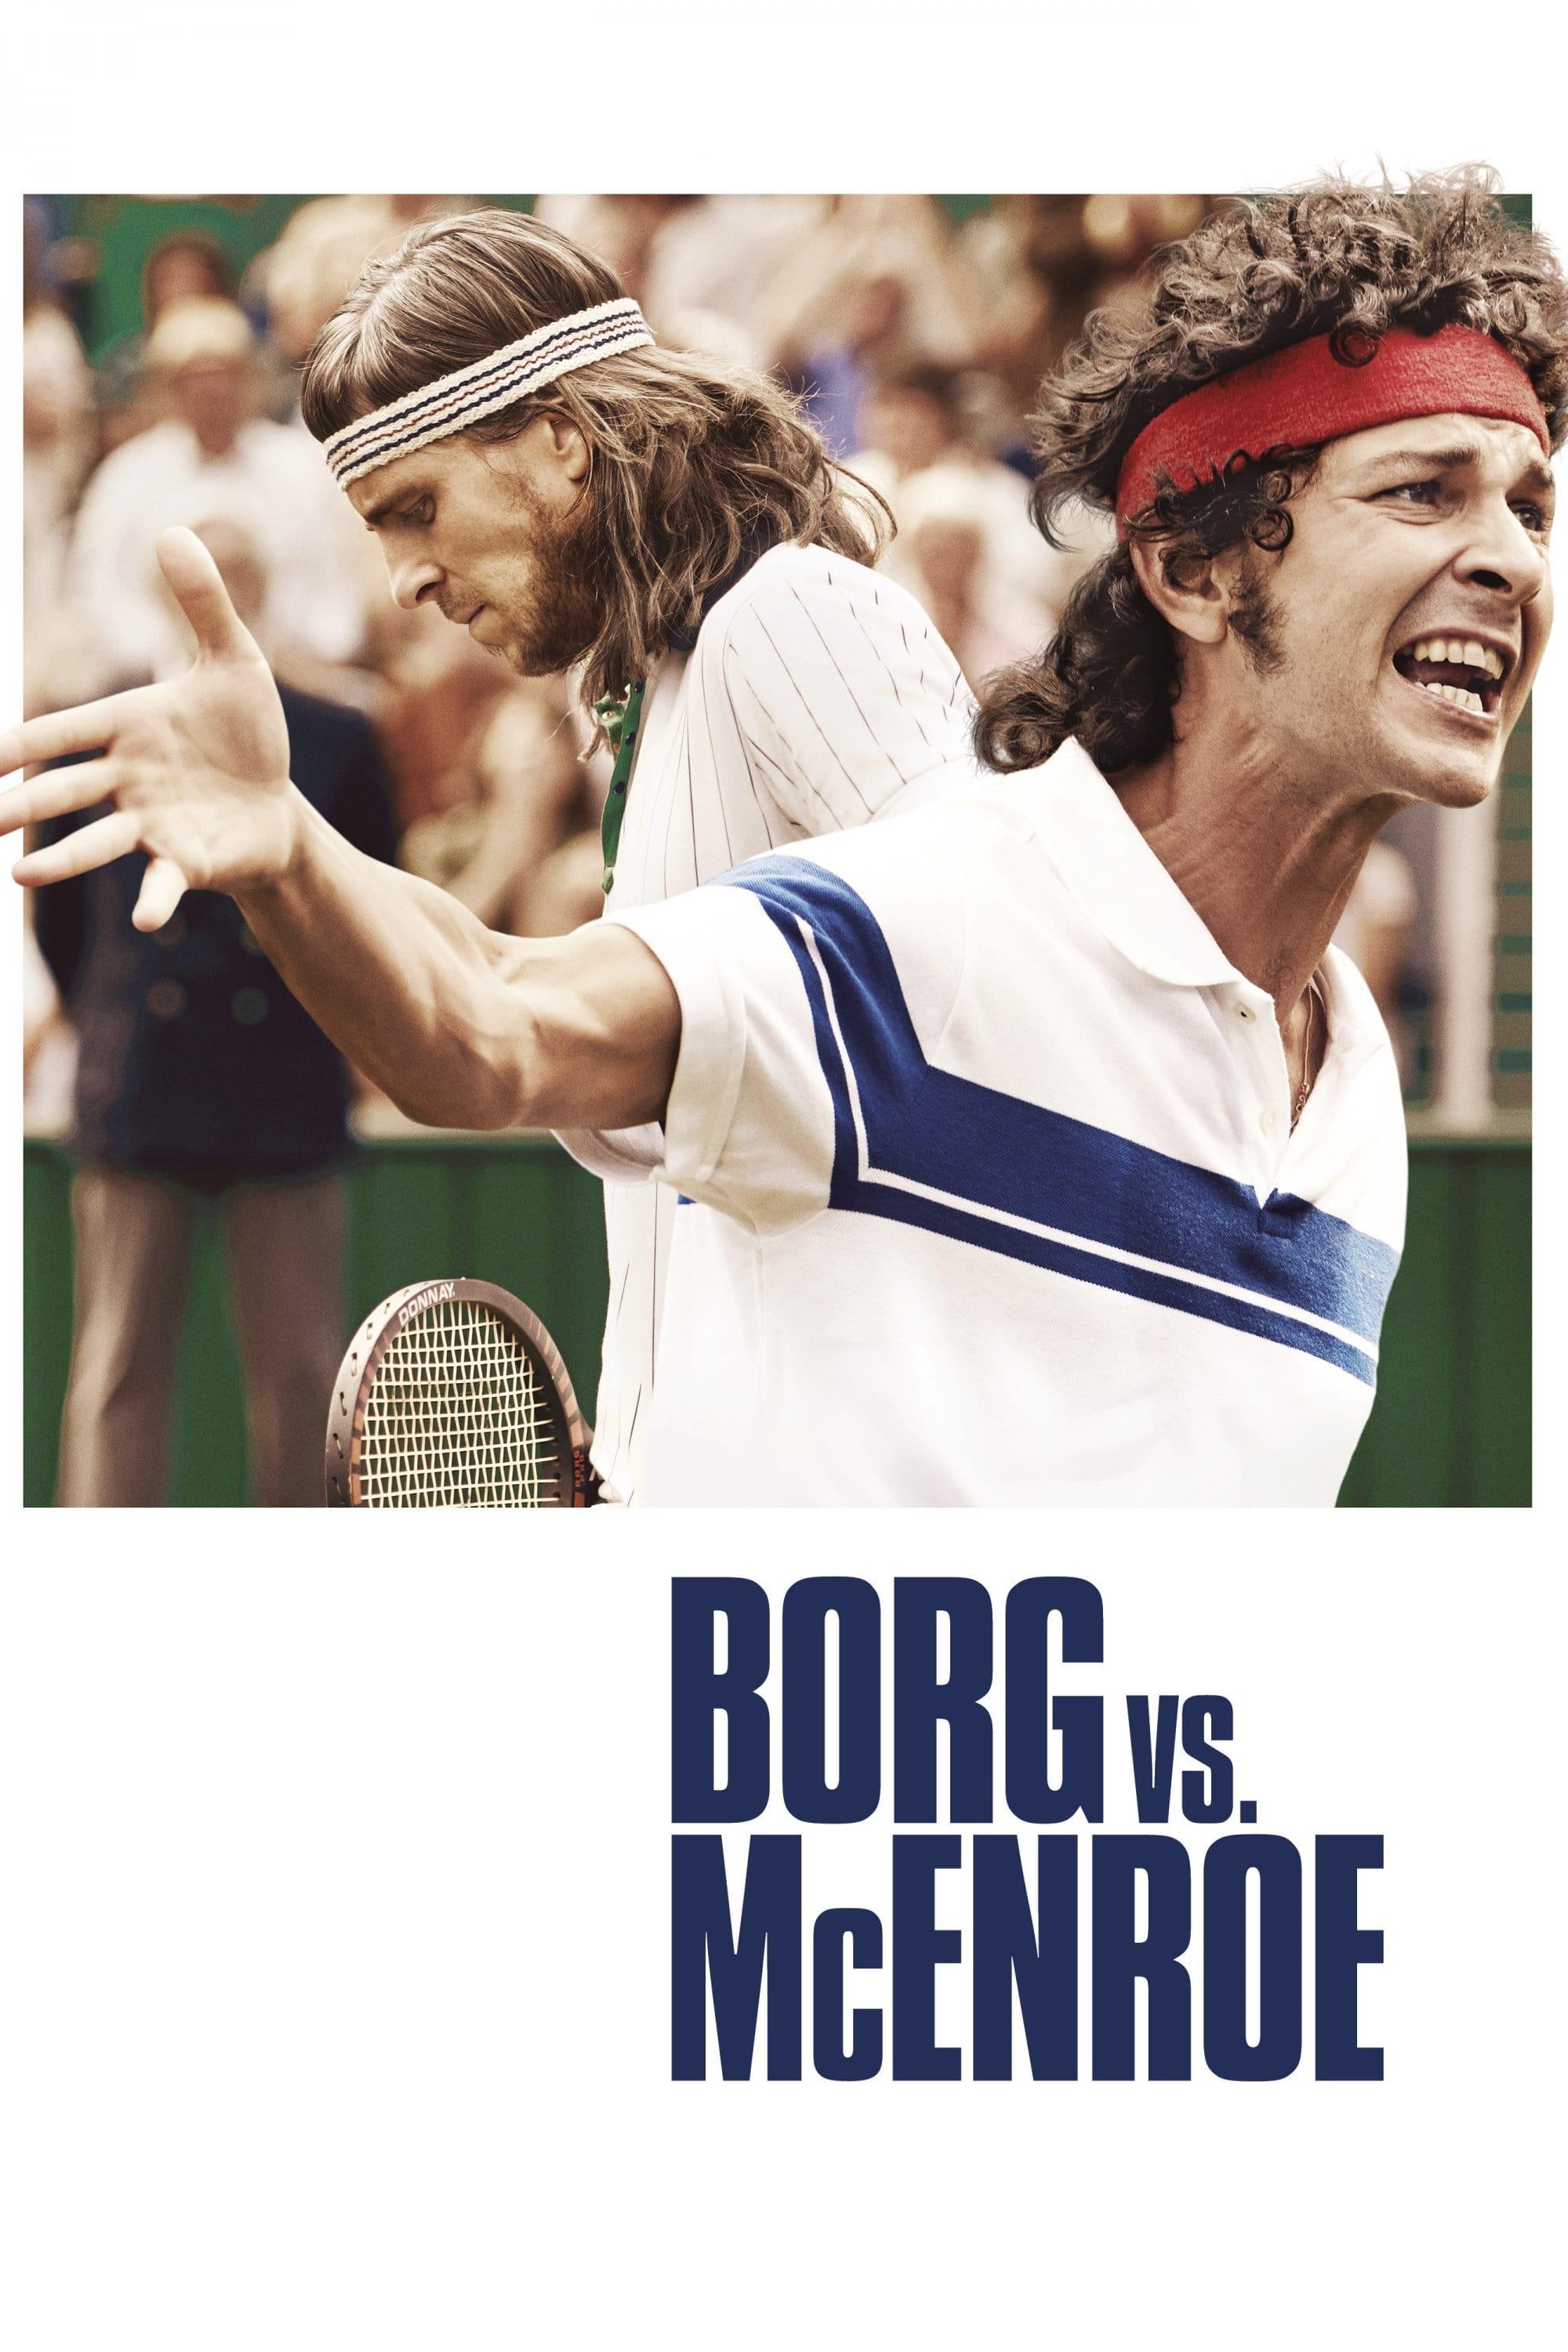 Borg vs McEnroe poster